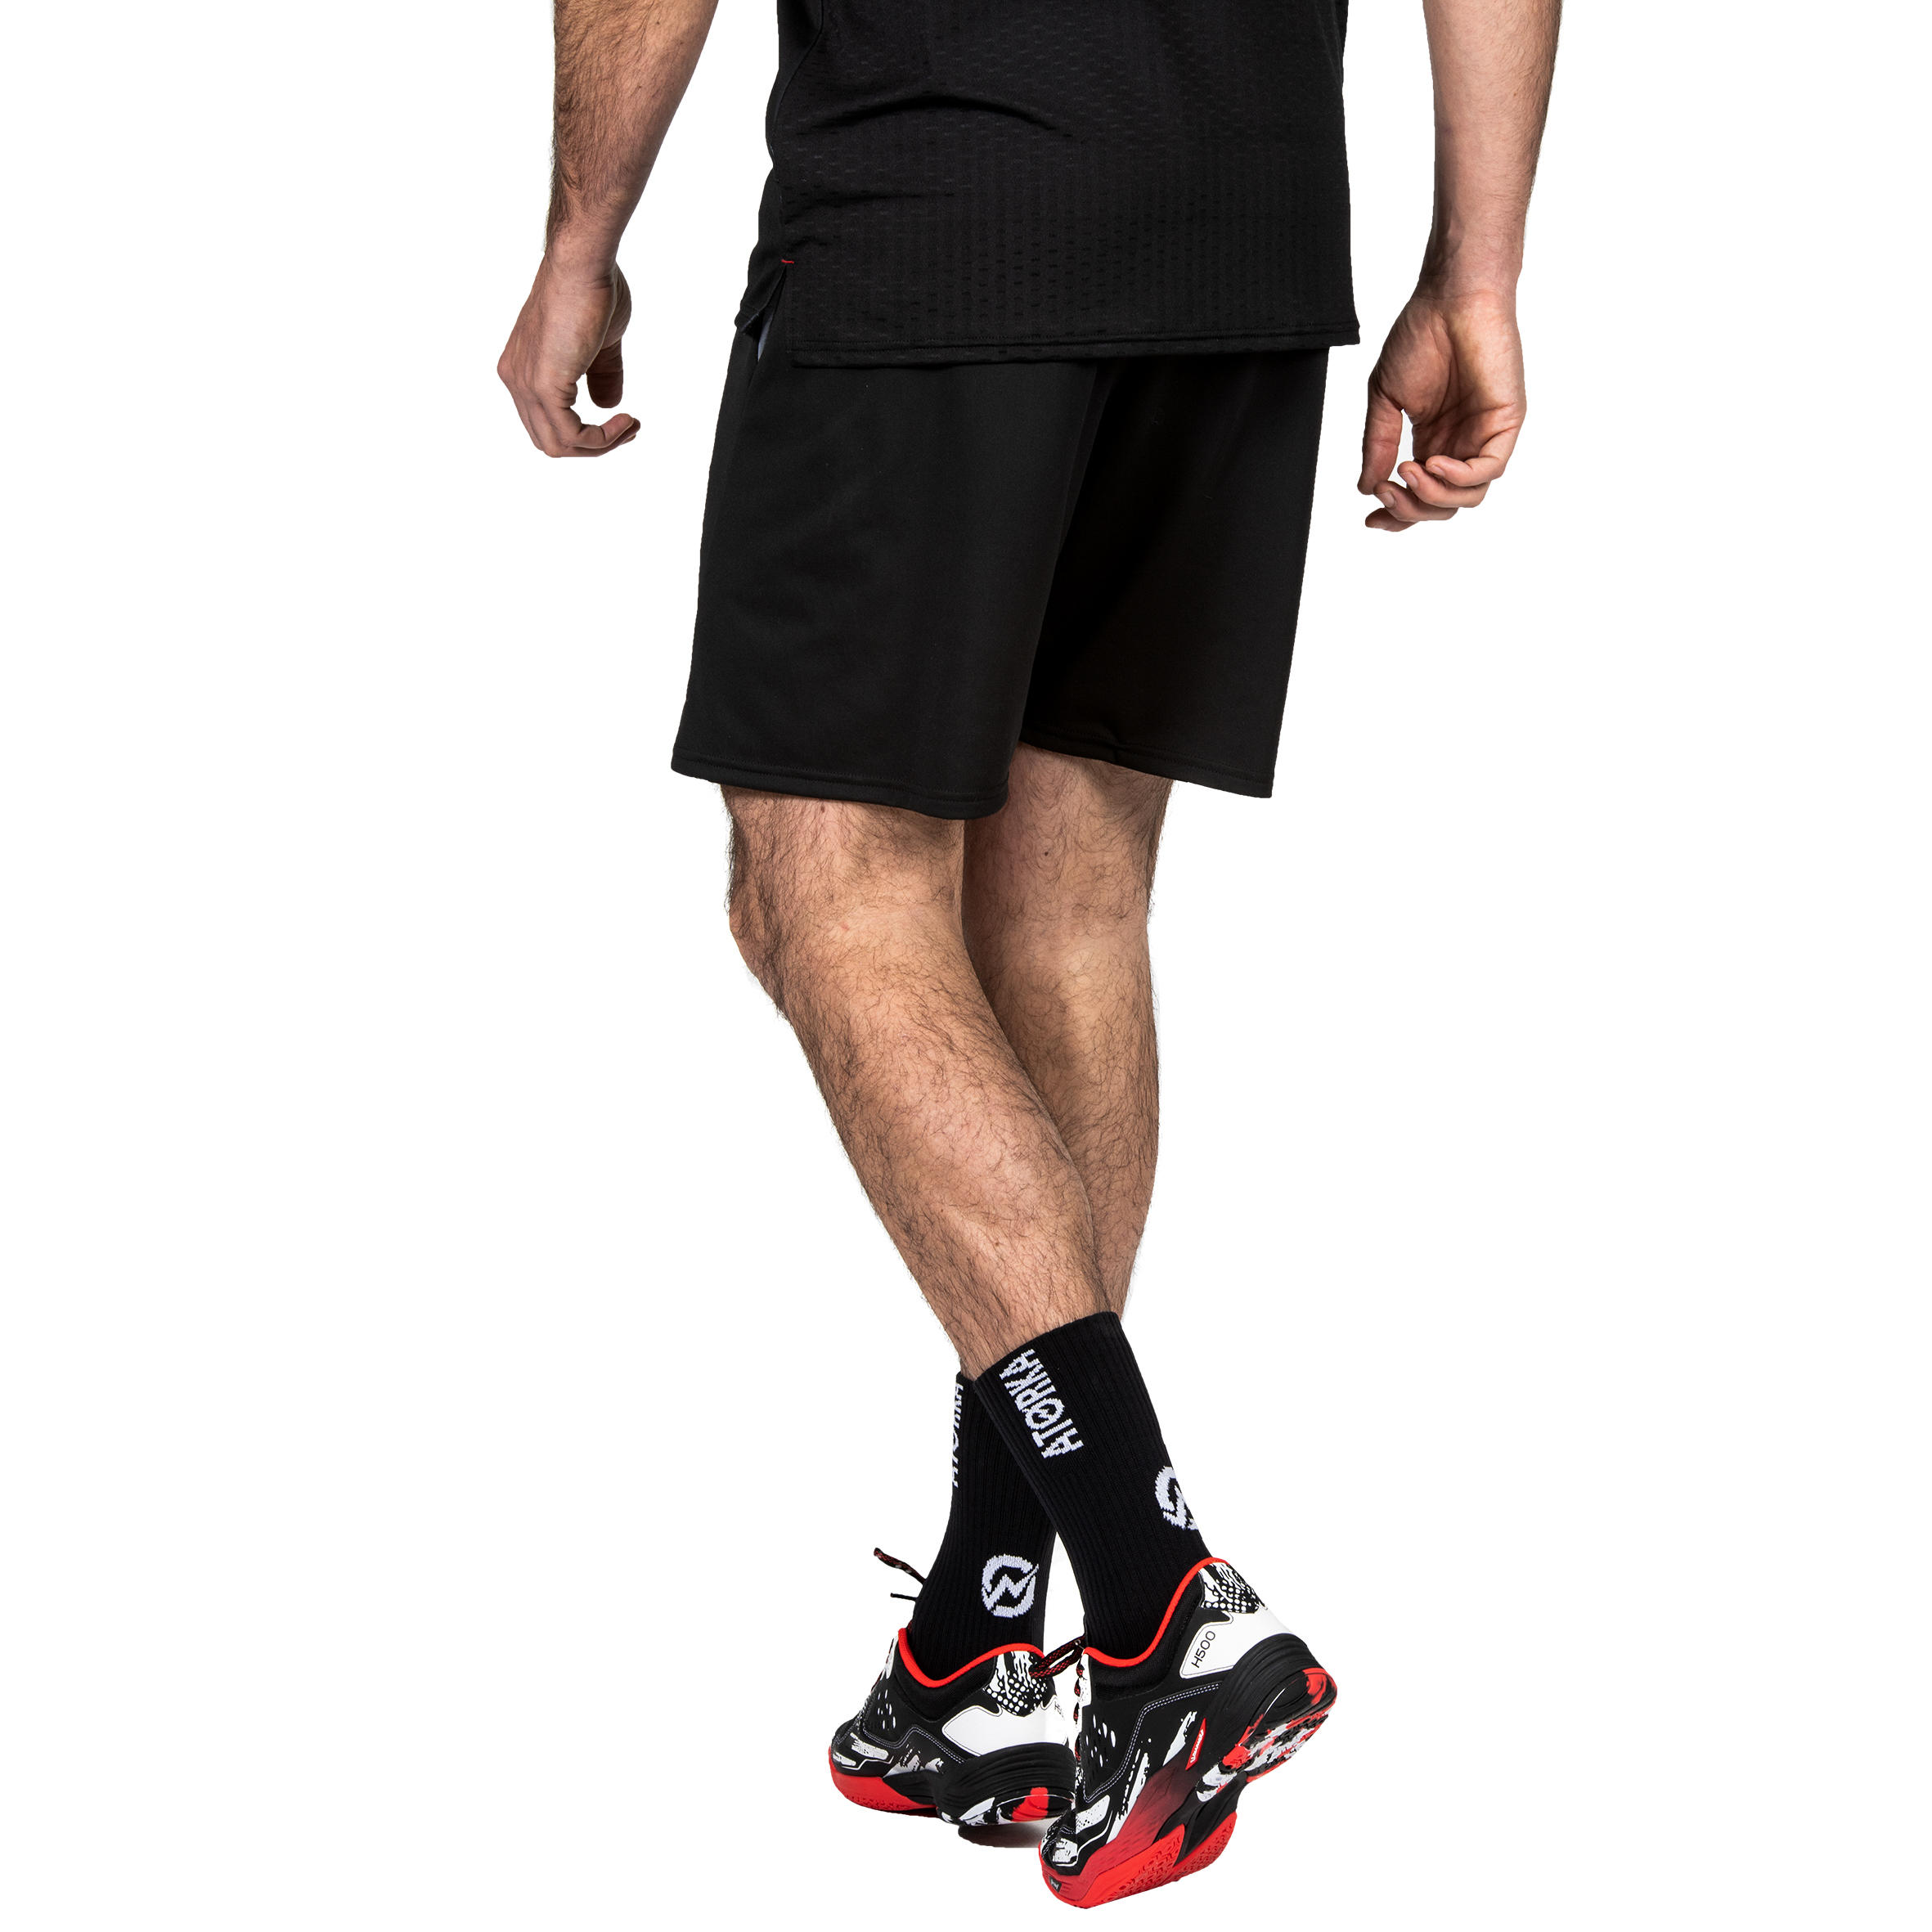 H500 Handball Shorts - Black/Grey 5/5